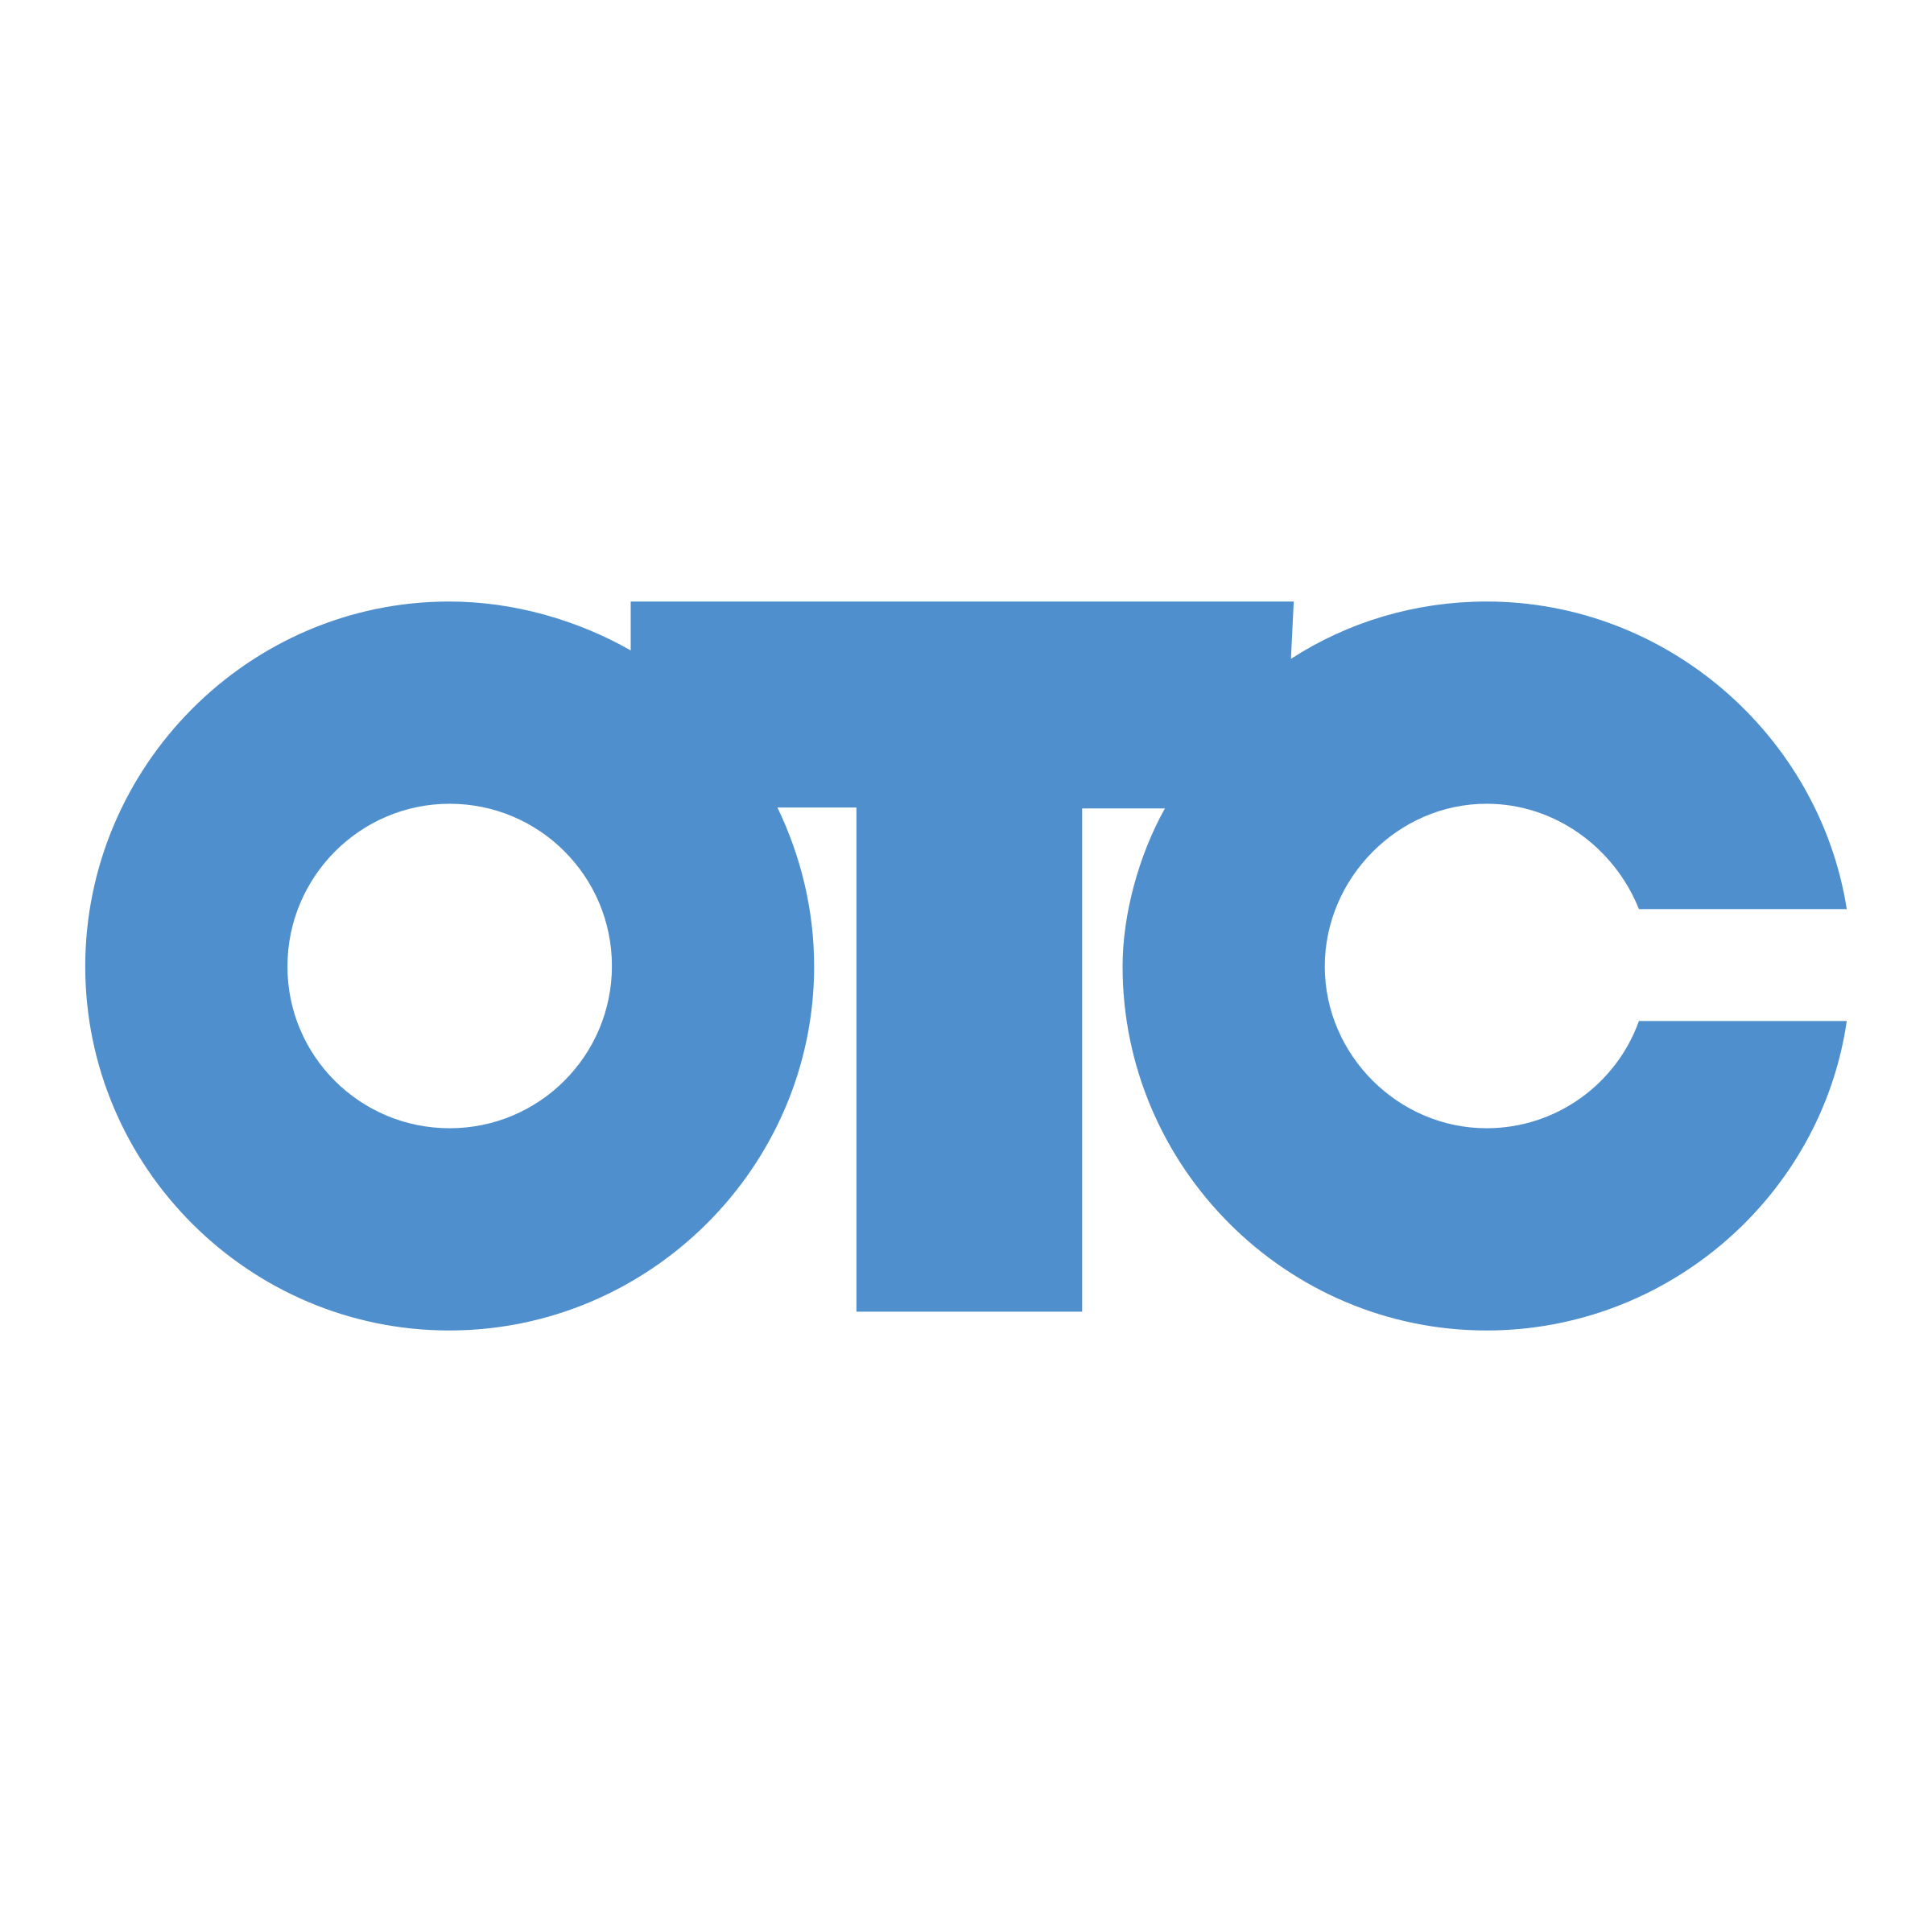 OTC Logo - OTC Logo PNG Transparent & SVG Vector - Freebie Supply